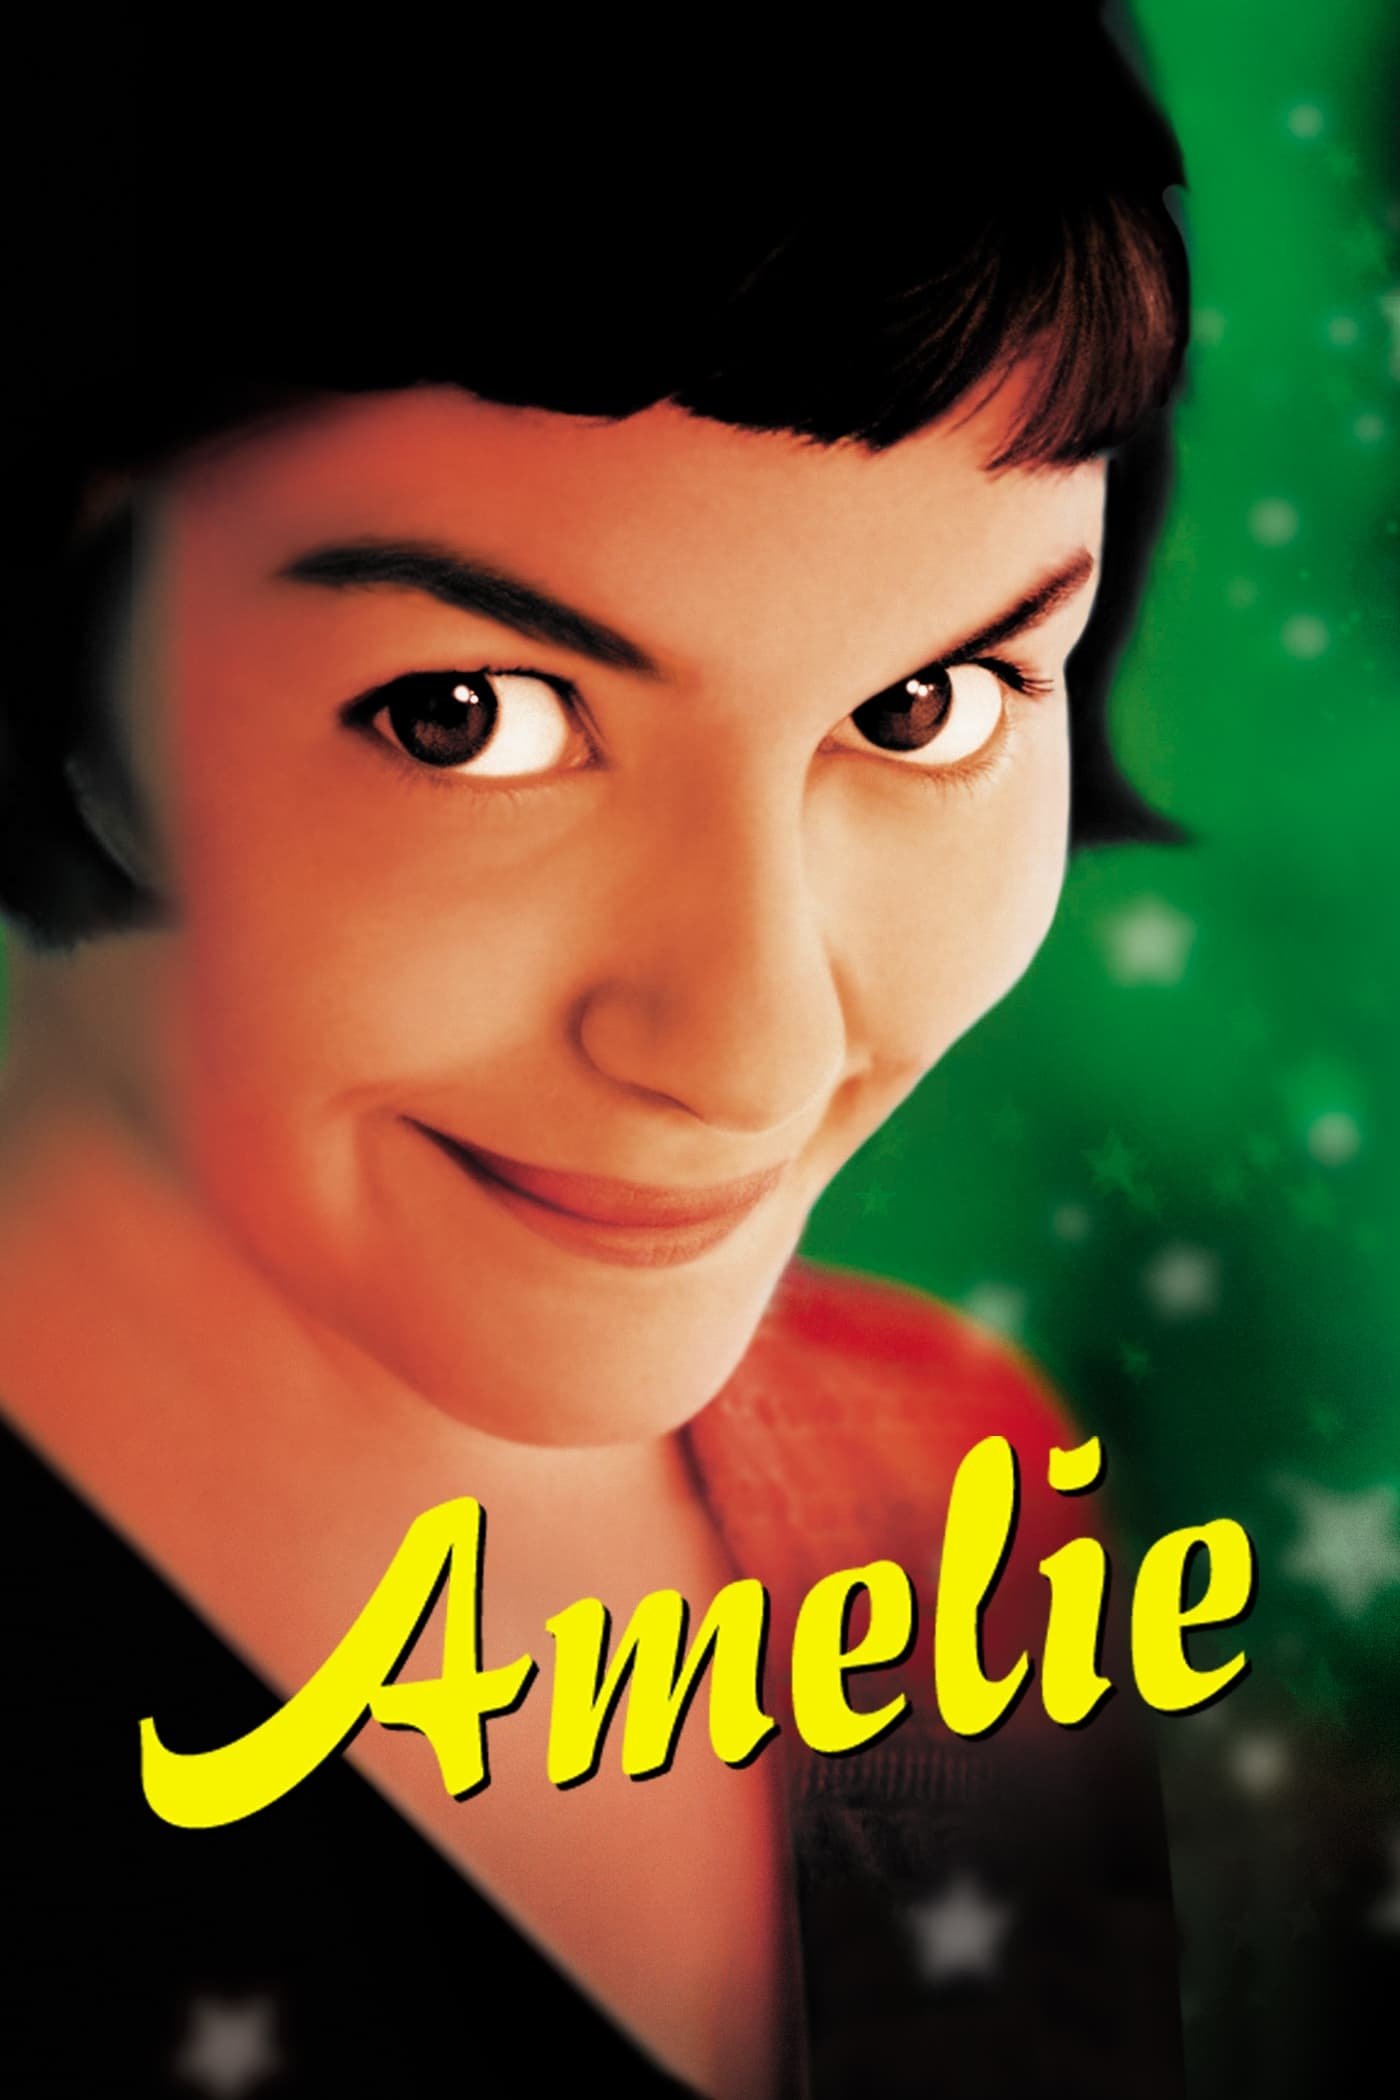 amelie french movie with english subtitles putlocker